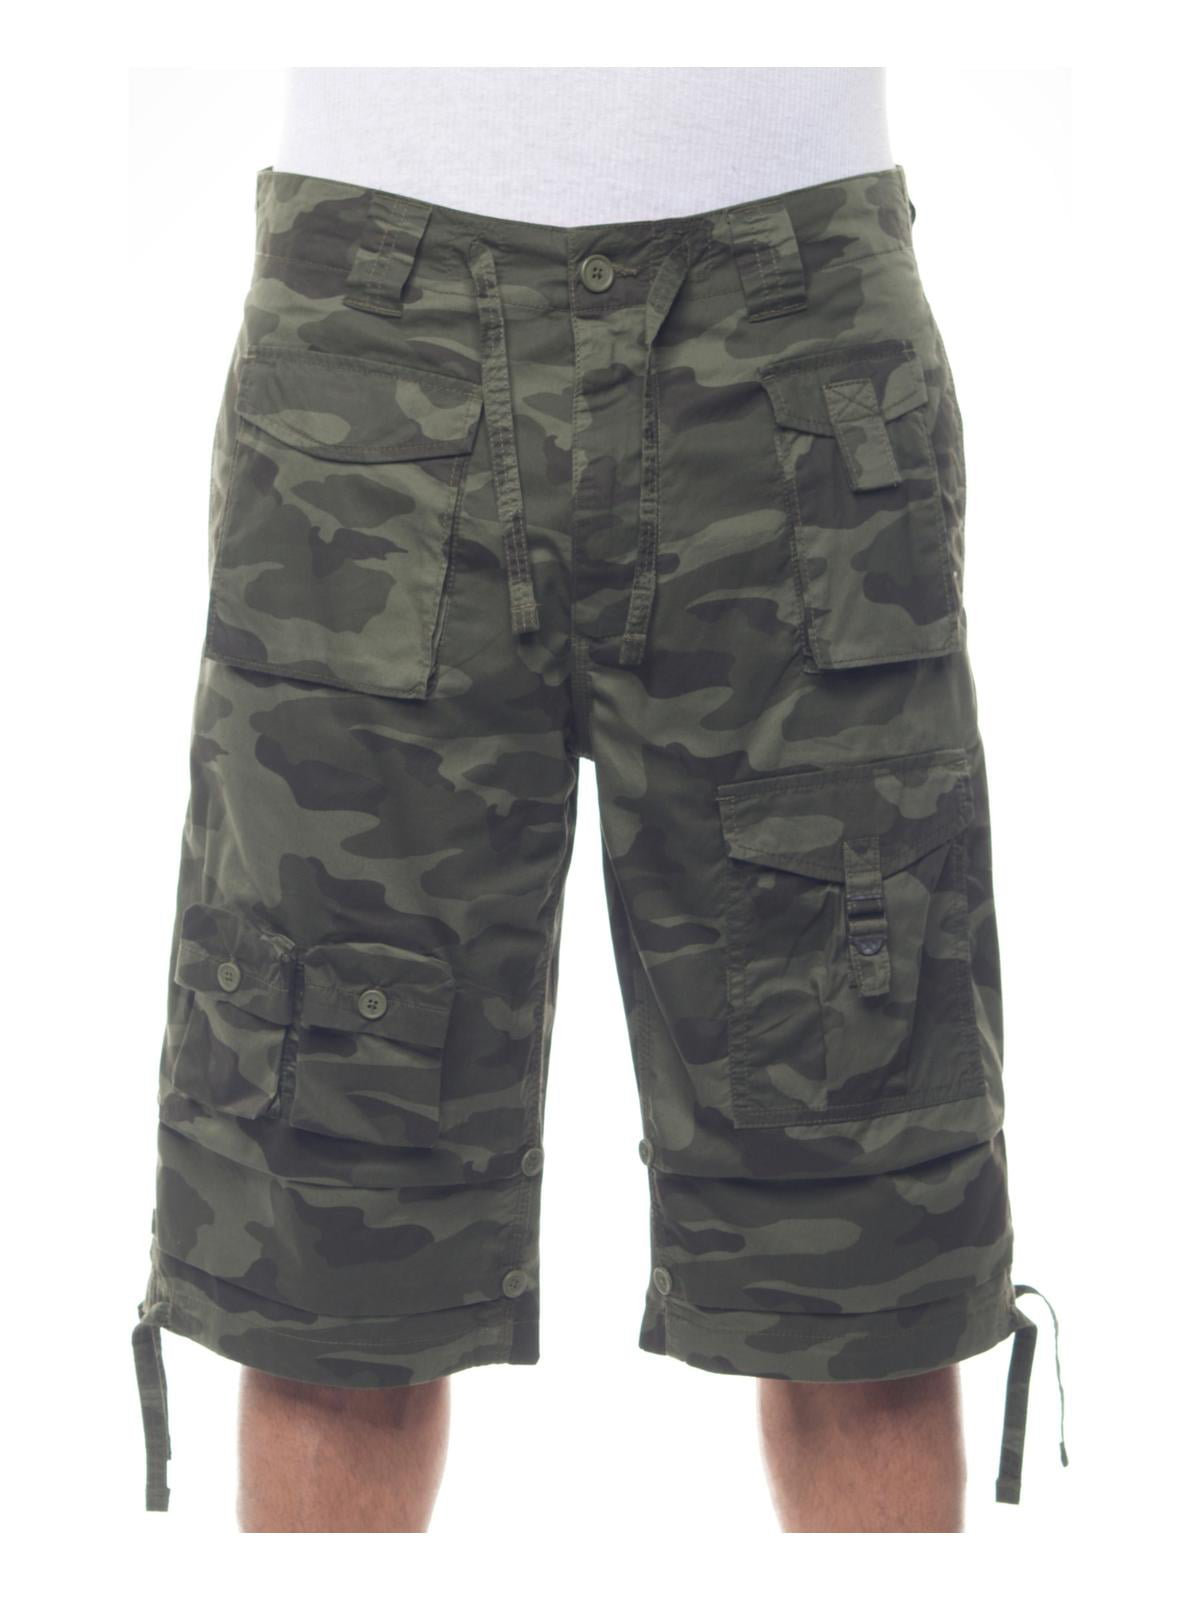 Buy > sean jean cargo shorts > in stock